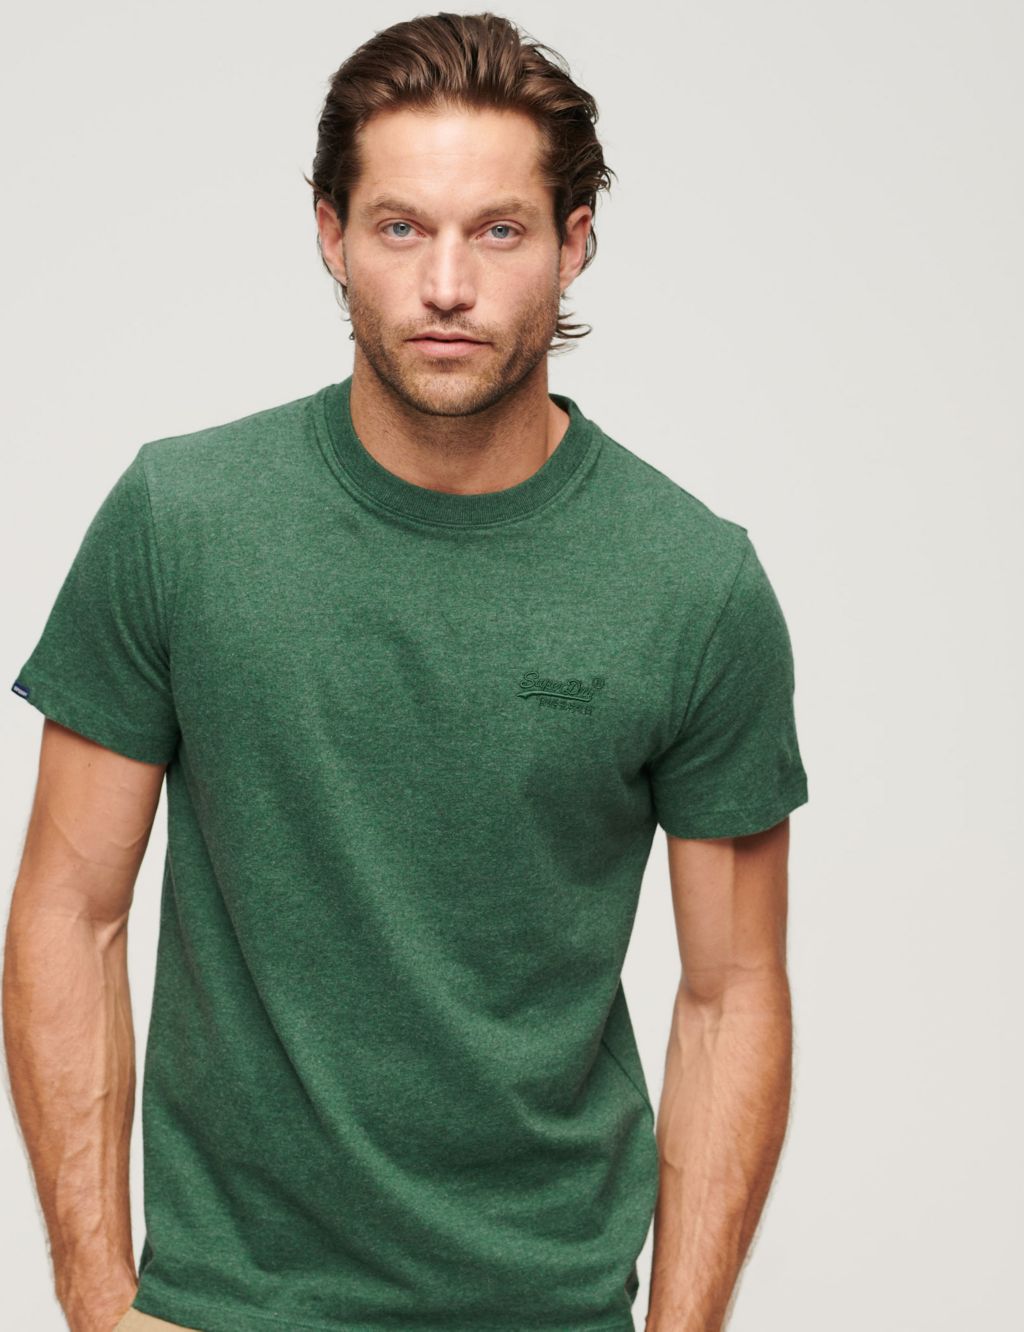 Men's Green T-Shirts | M&S